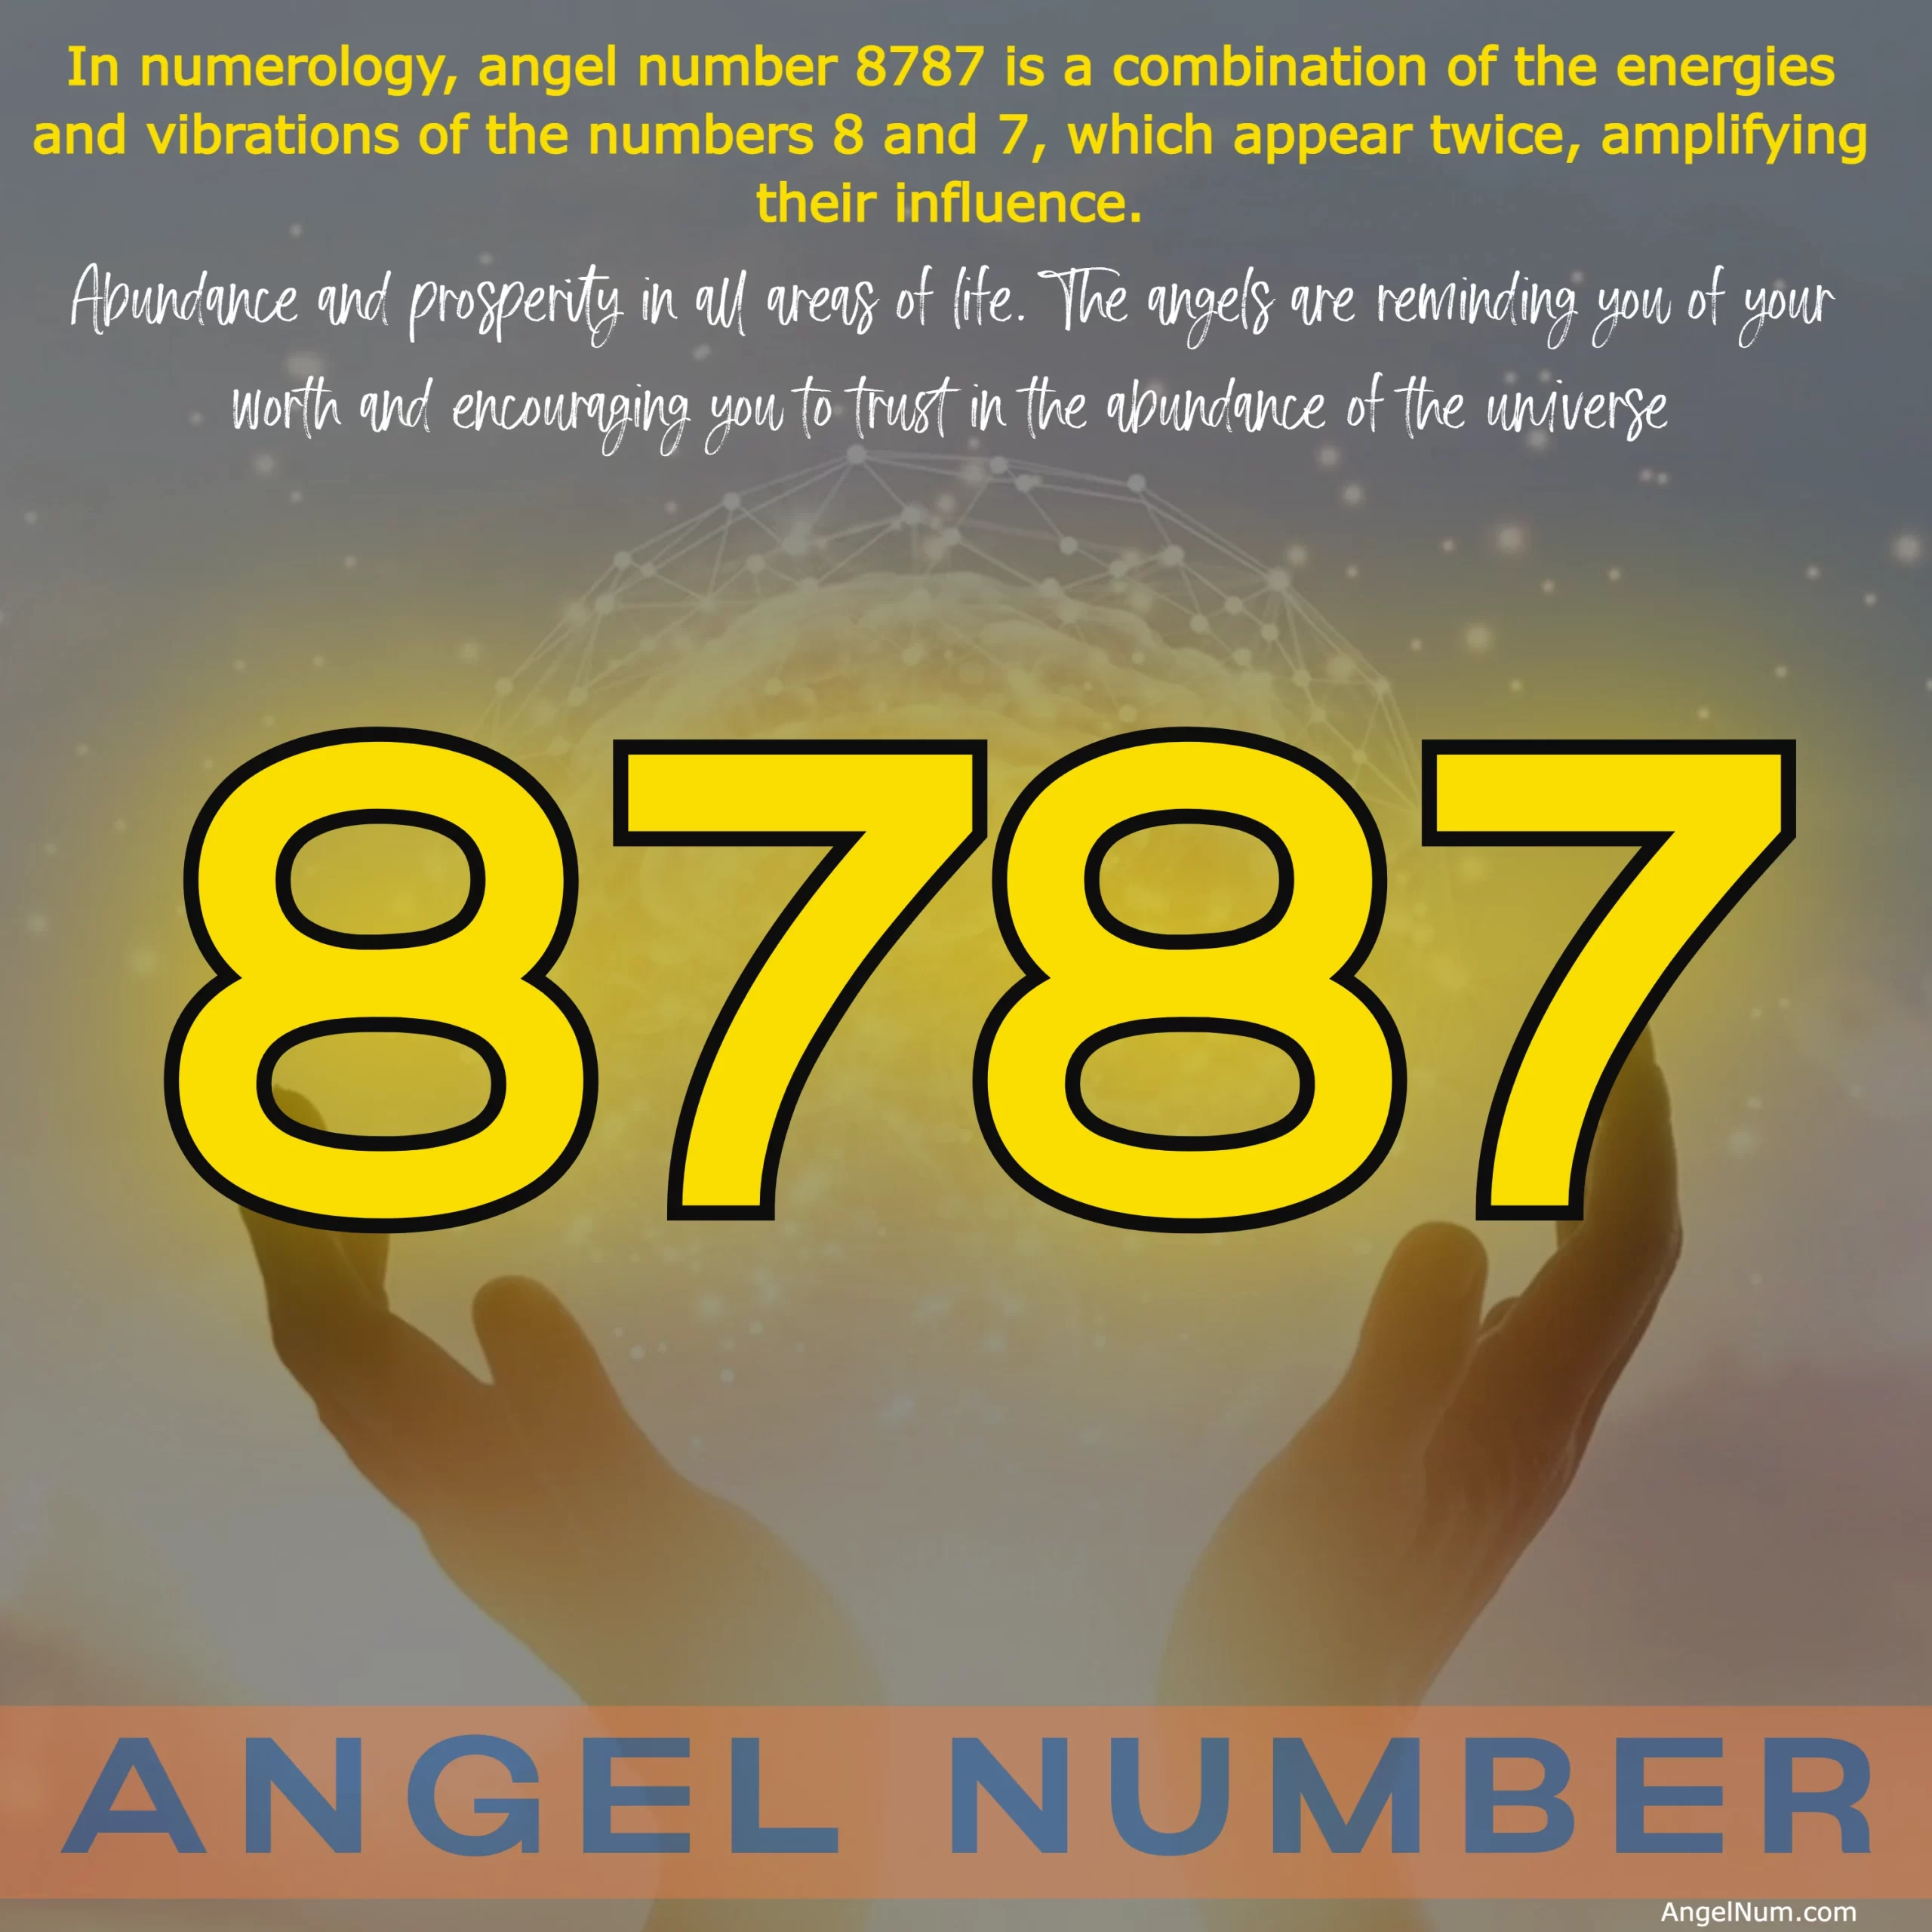 Angel Number 8787: The Symbolism of Abundance and Prosperity